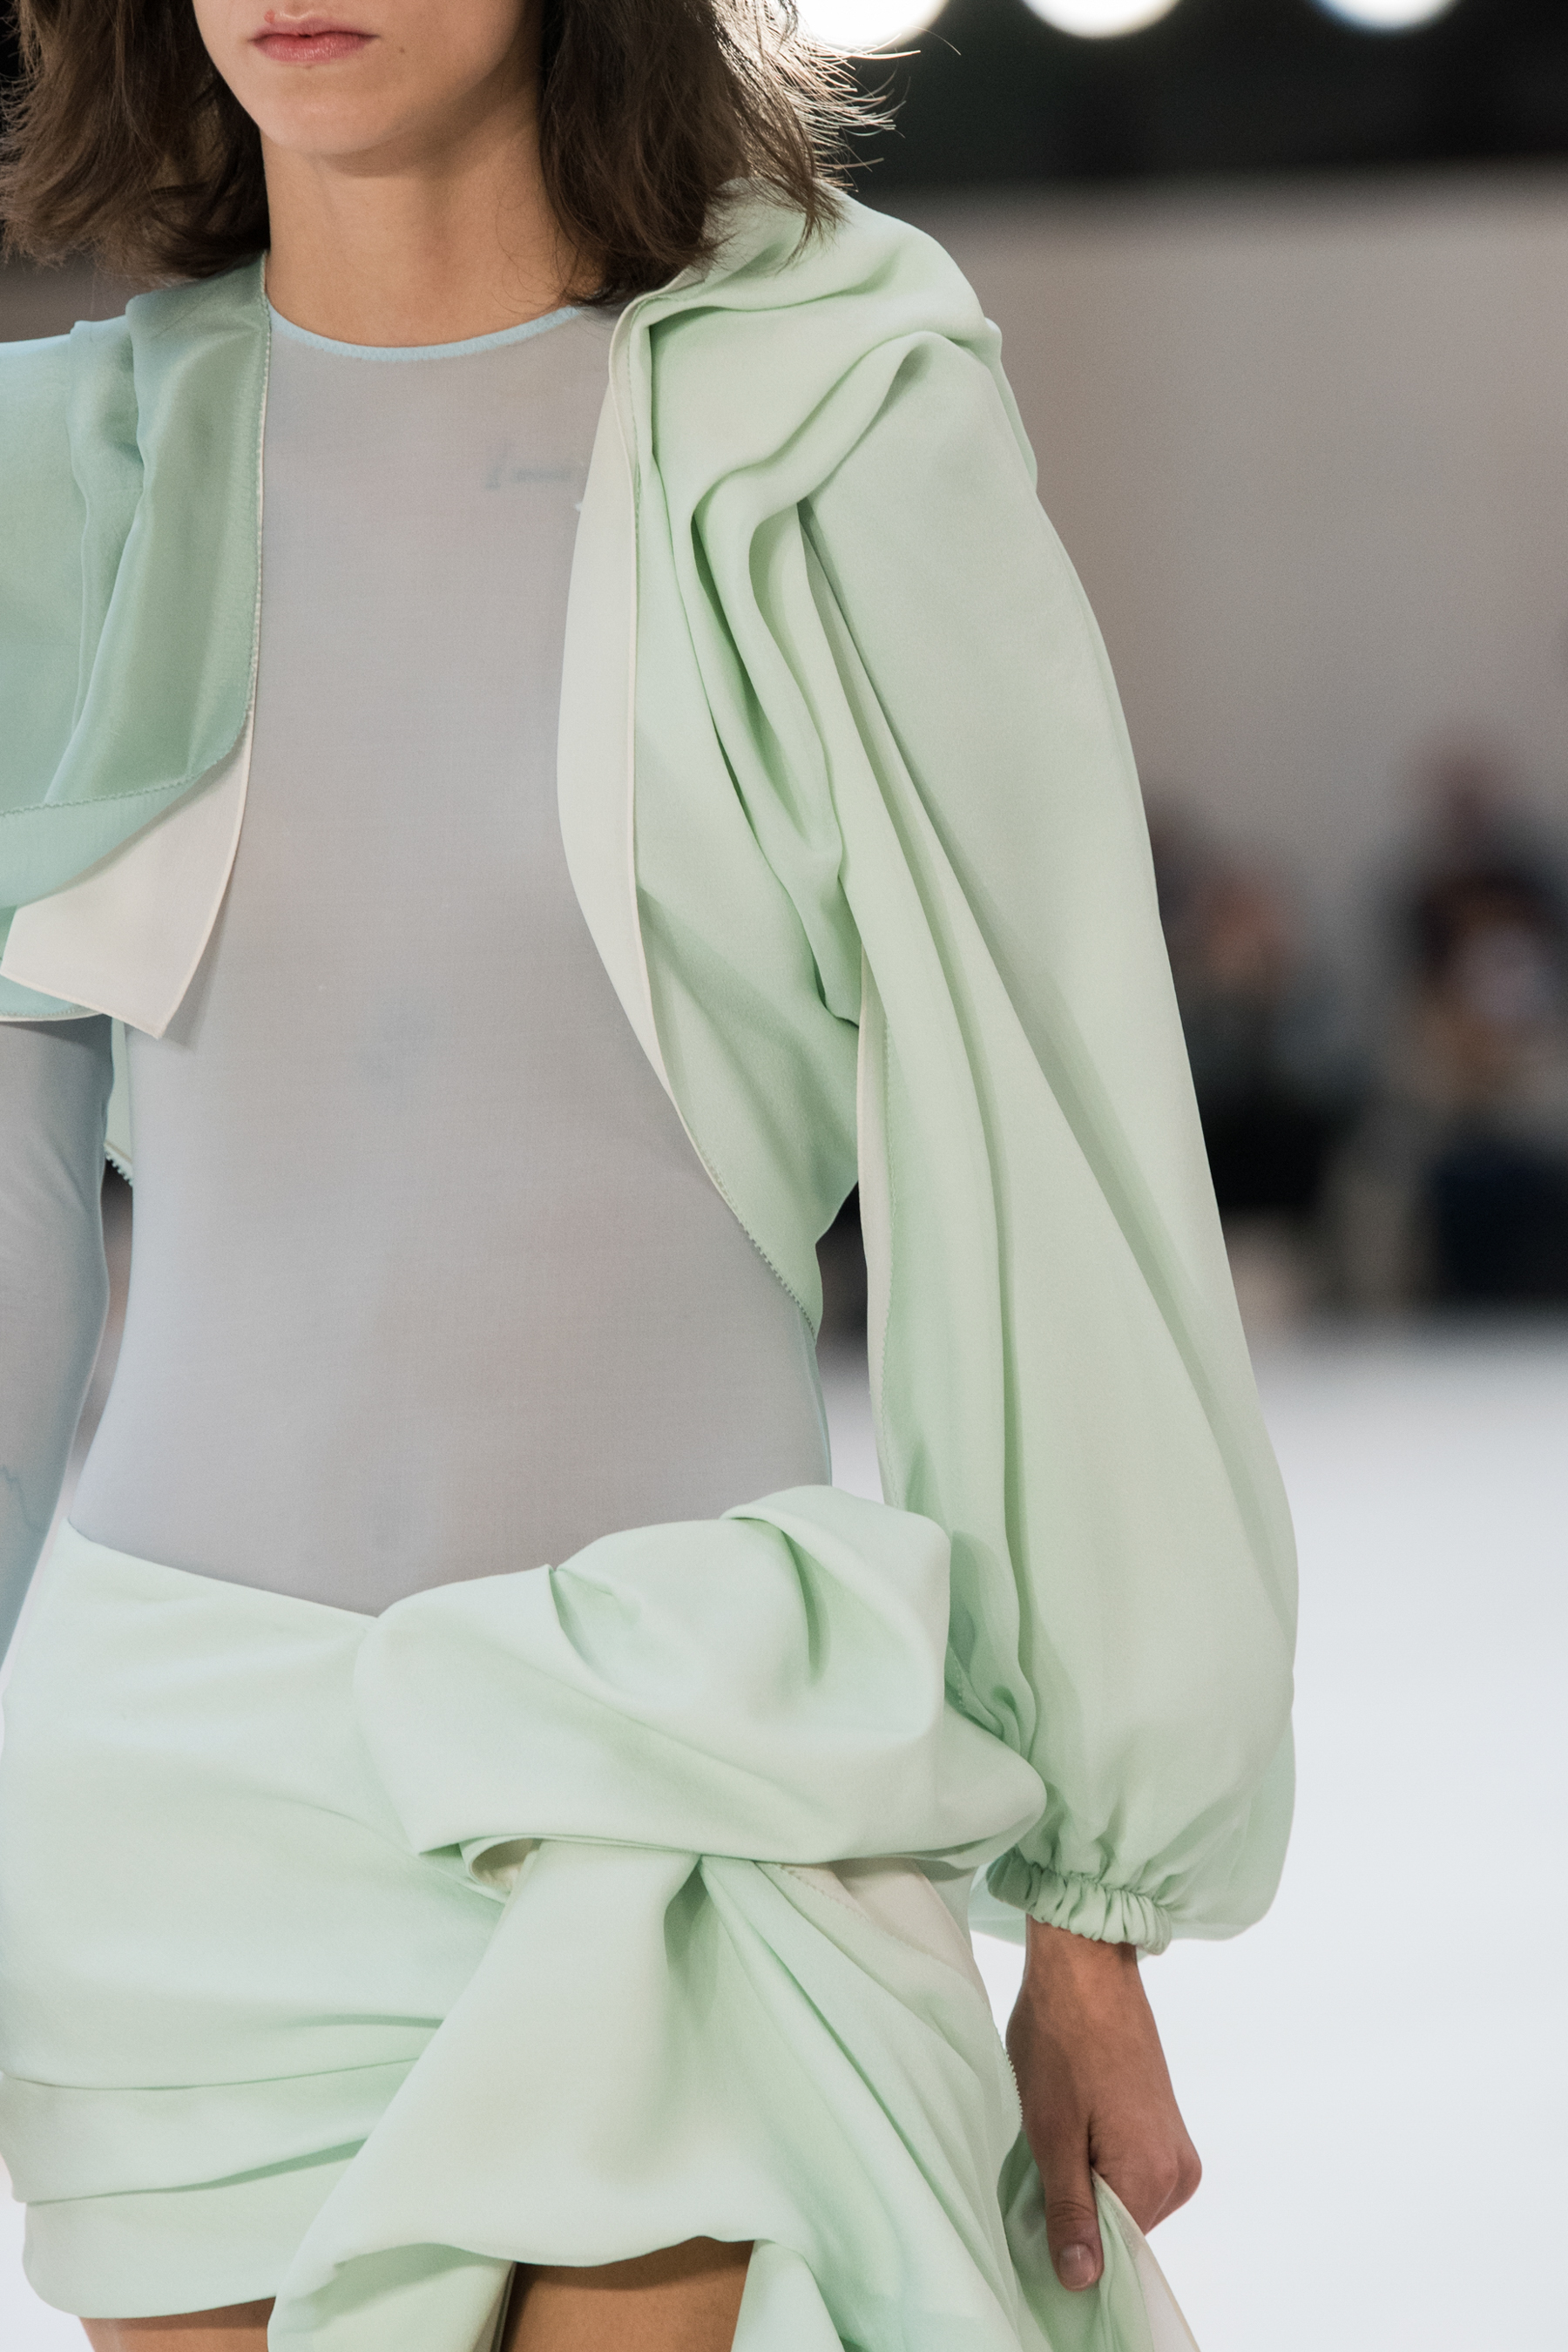 Loewe Spring 2022 Details Fashion Show